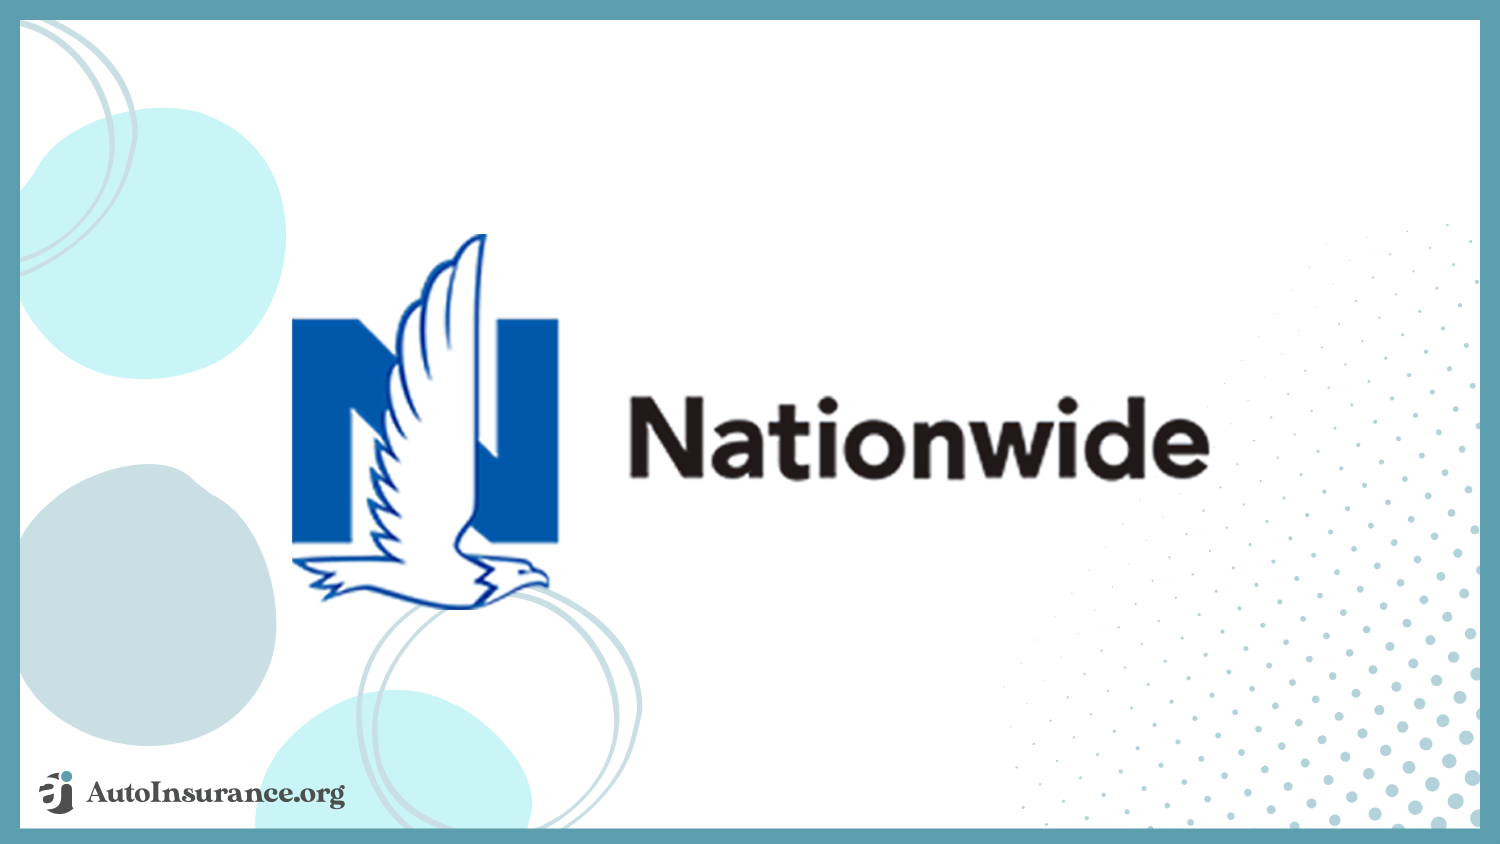 Nationwide: Best Comprehensive Auto Insurance Companies